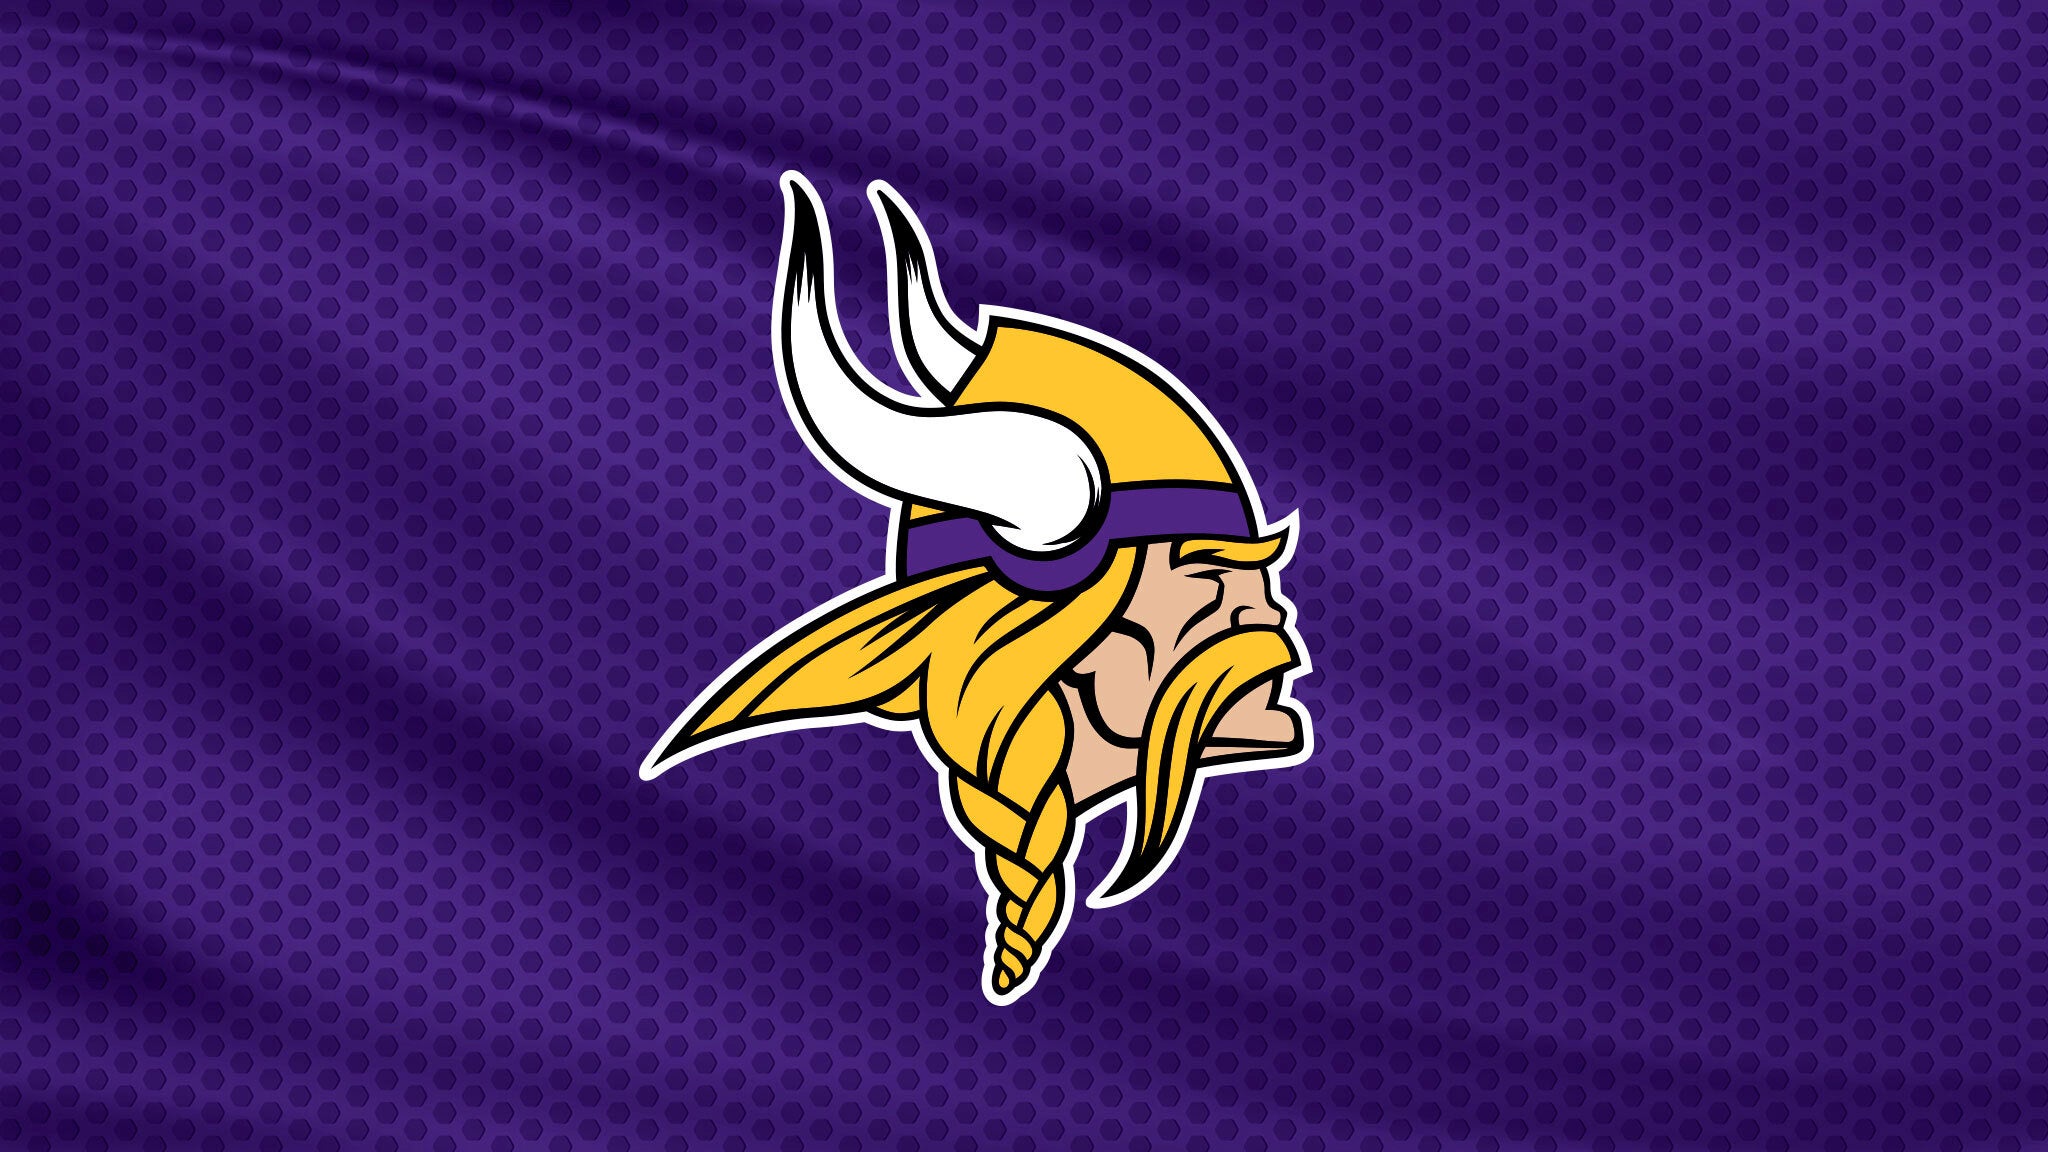 Minnesota Vikings vs. Houston Texans hero